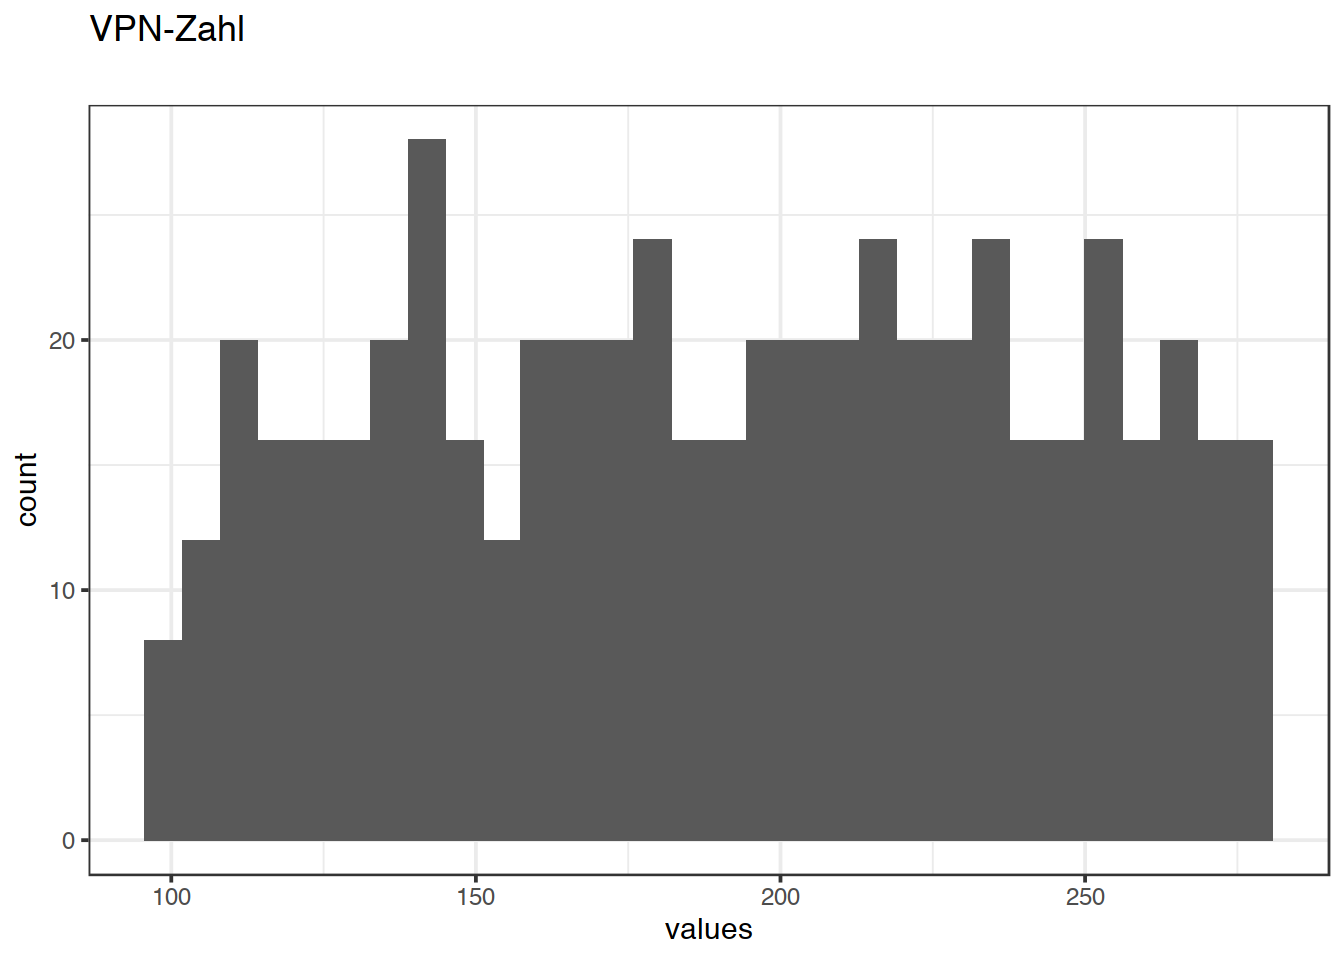 Distribution of values for VPN-Zahl